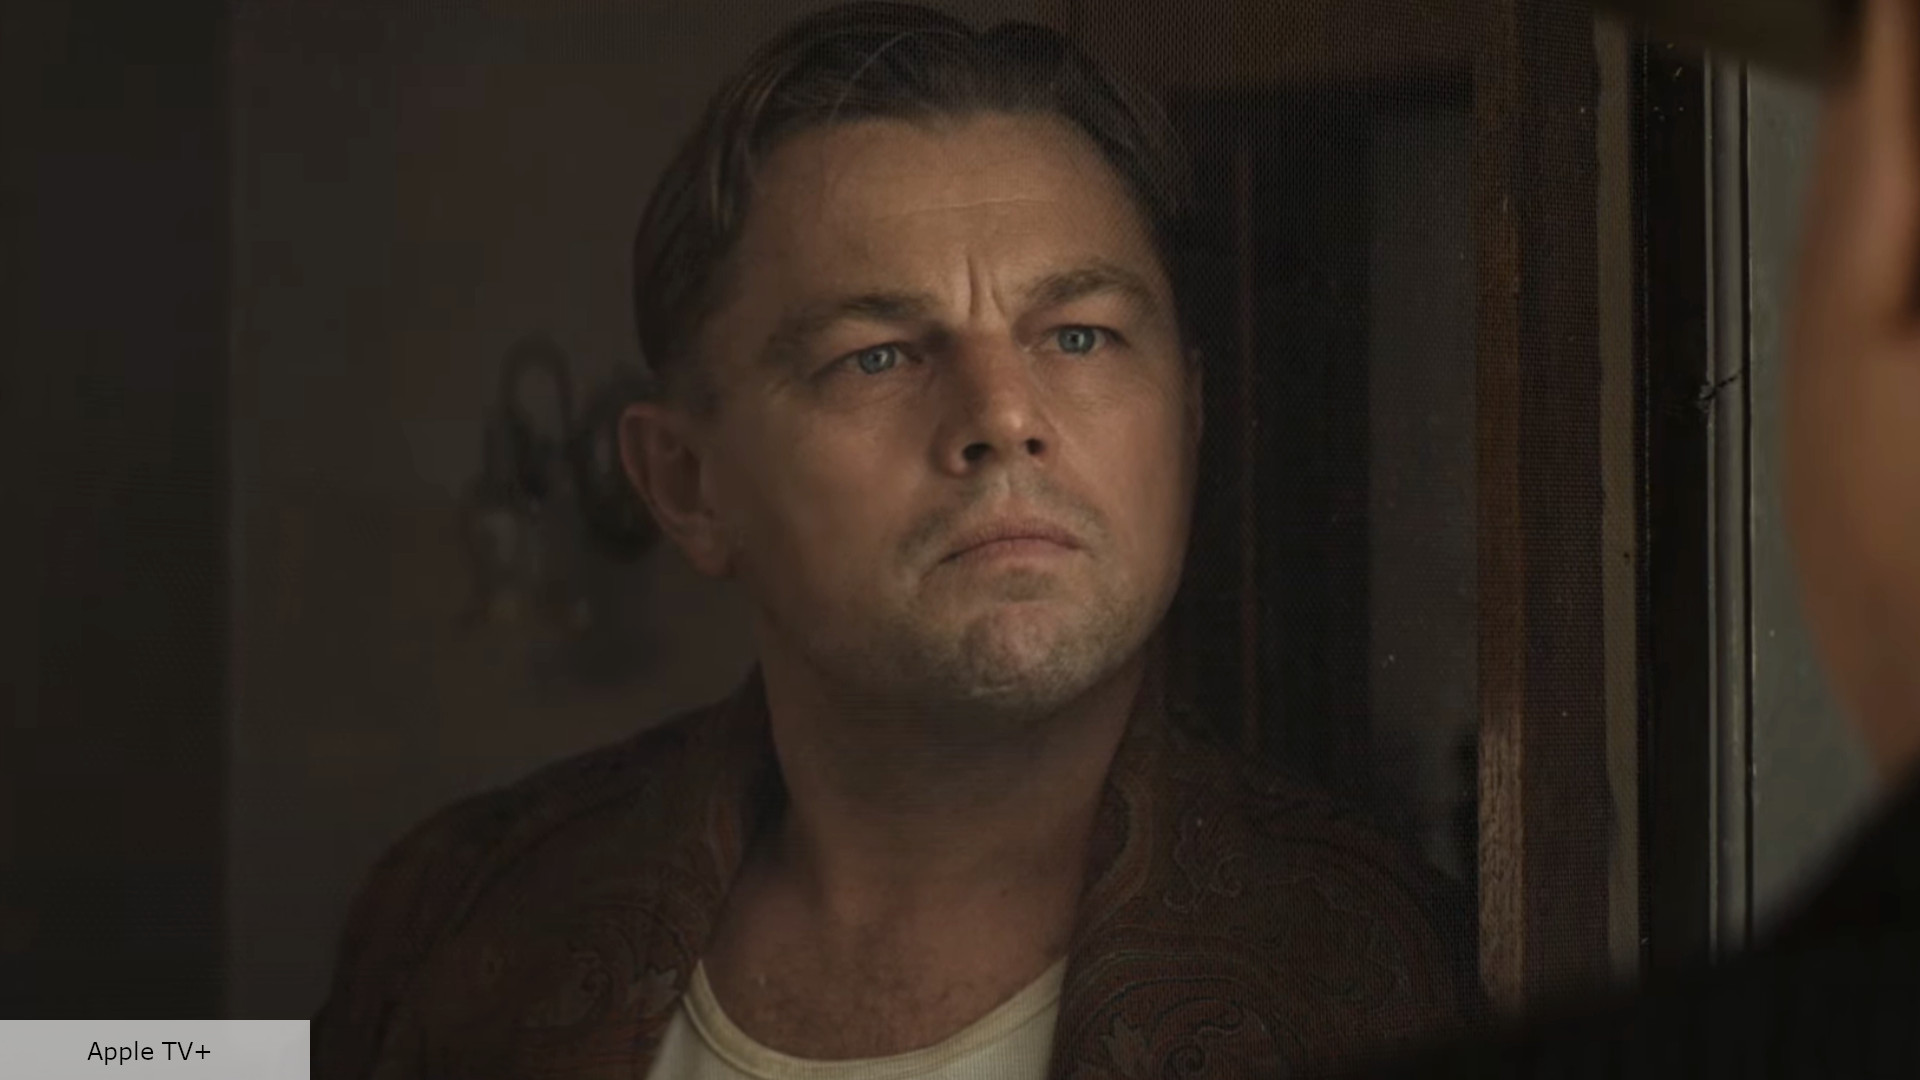 New Leonardo DiCaprio movie trailer sees the Oscar winner turn nasty